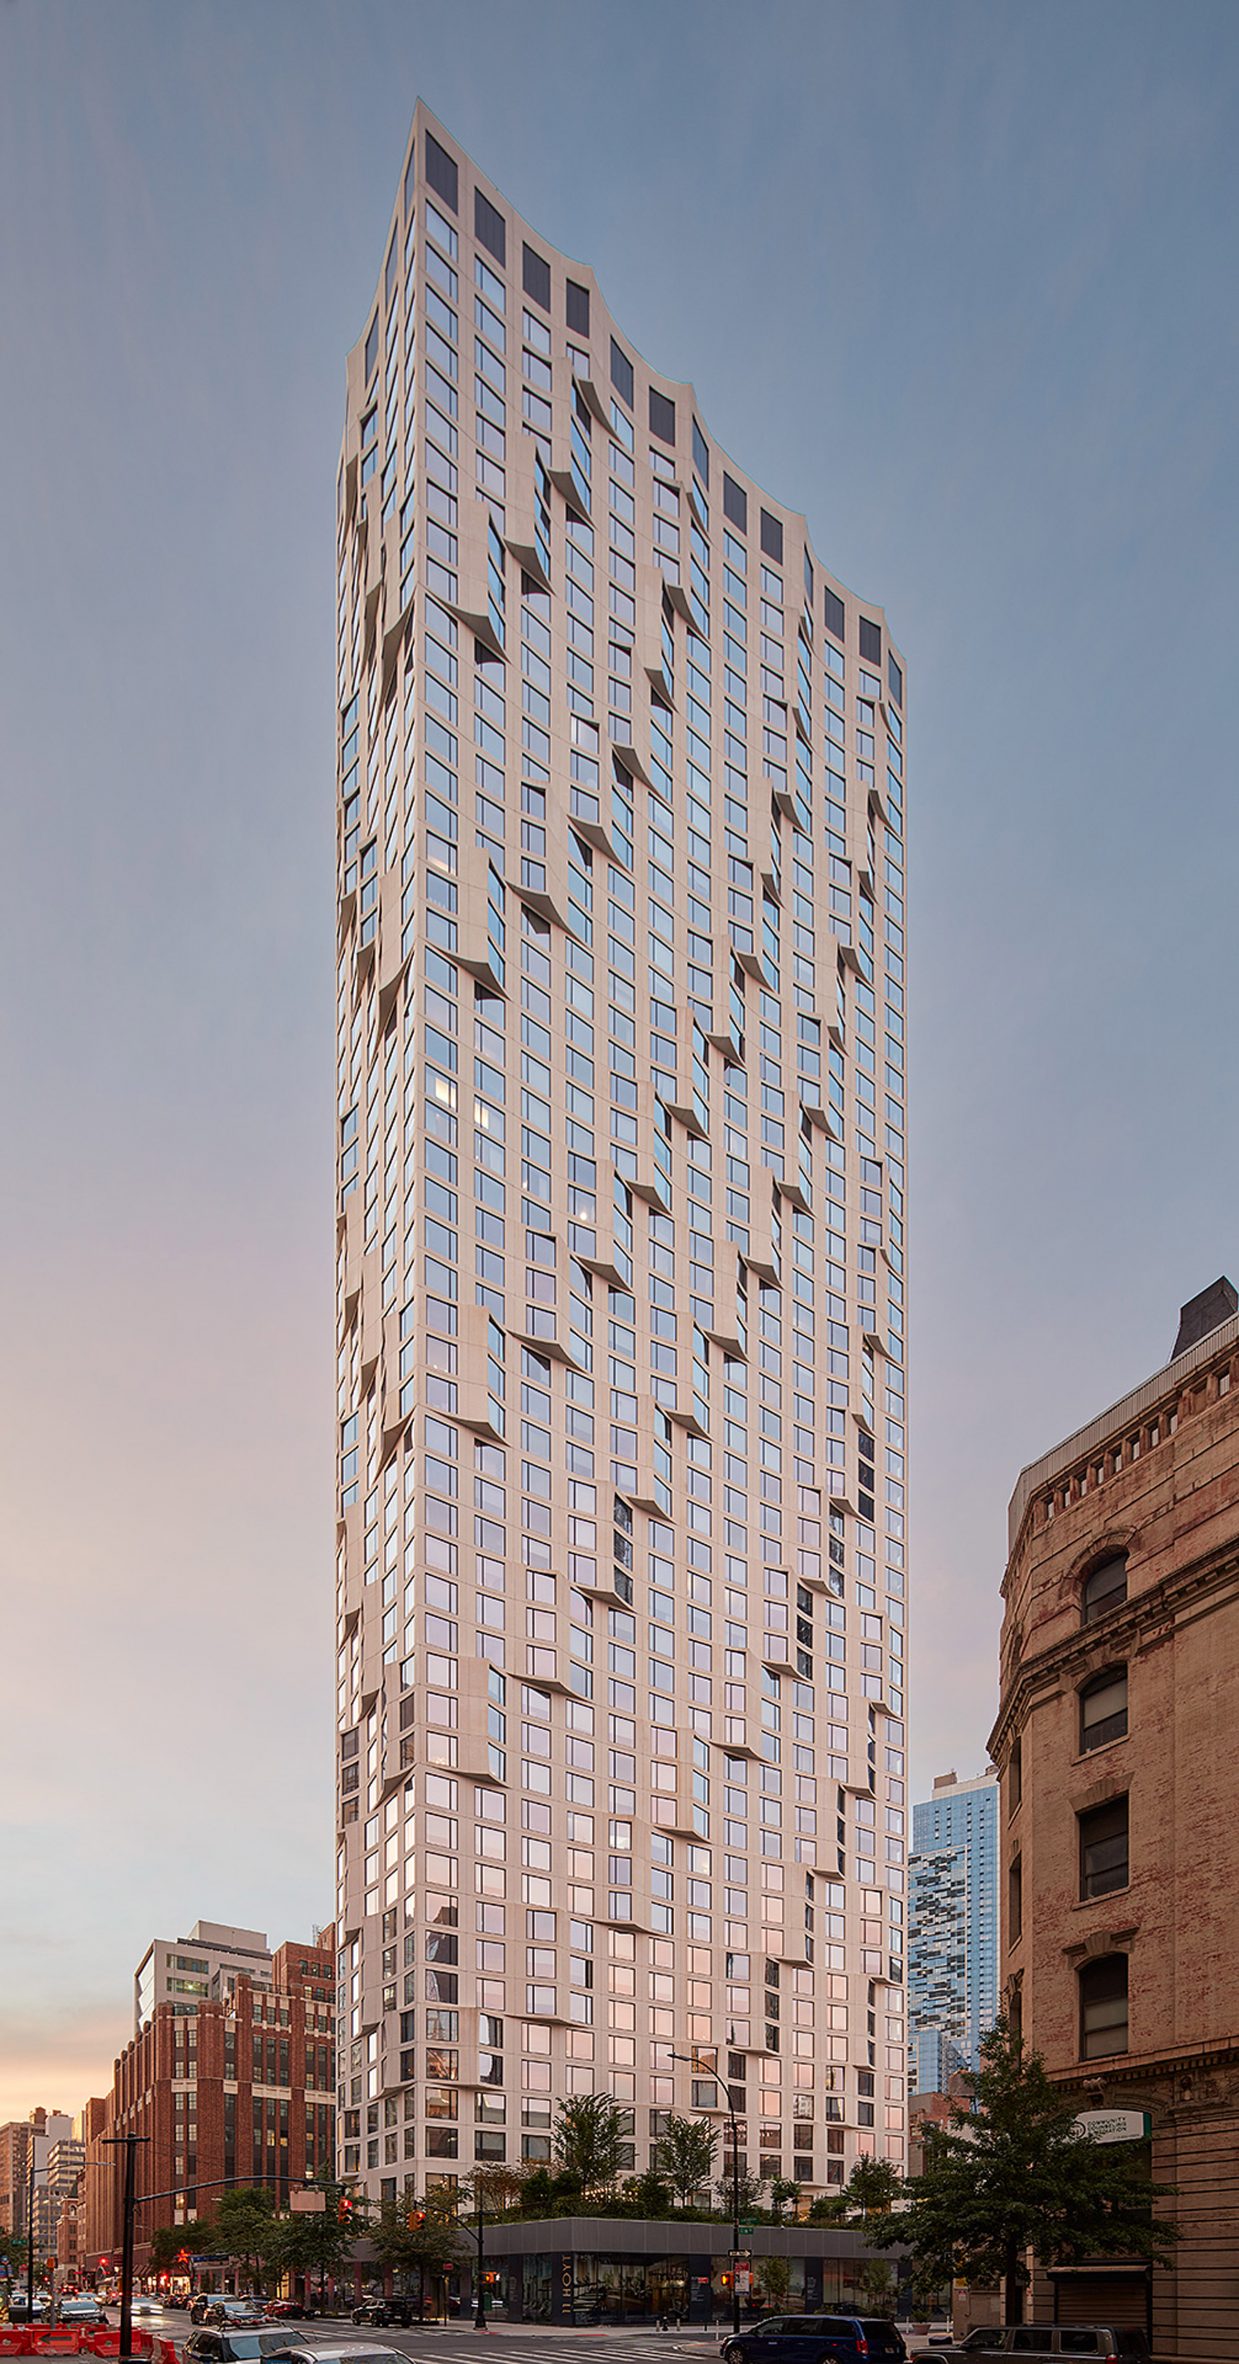 Undulating facade of Brooklyn skyscraper